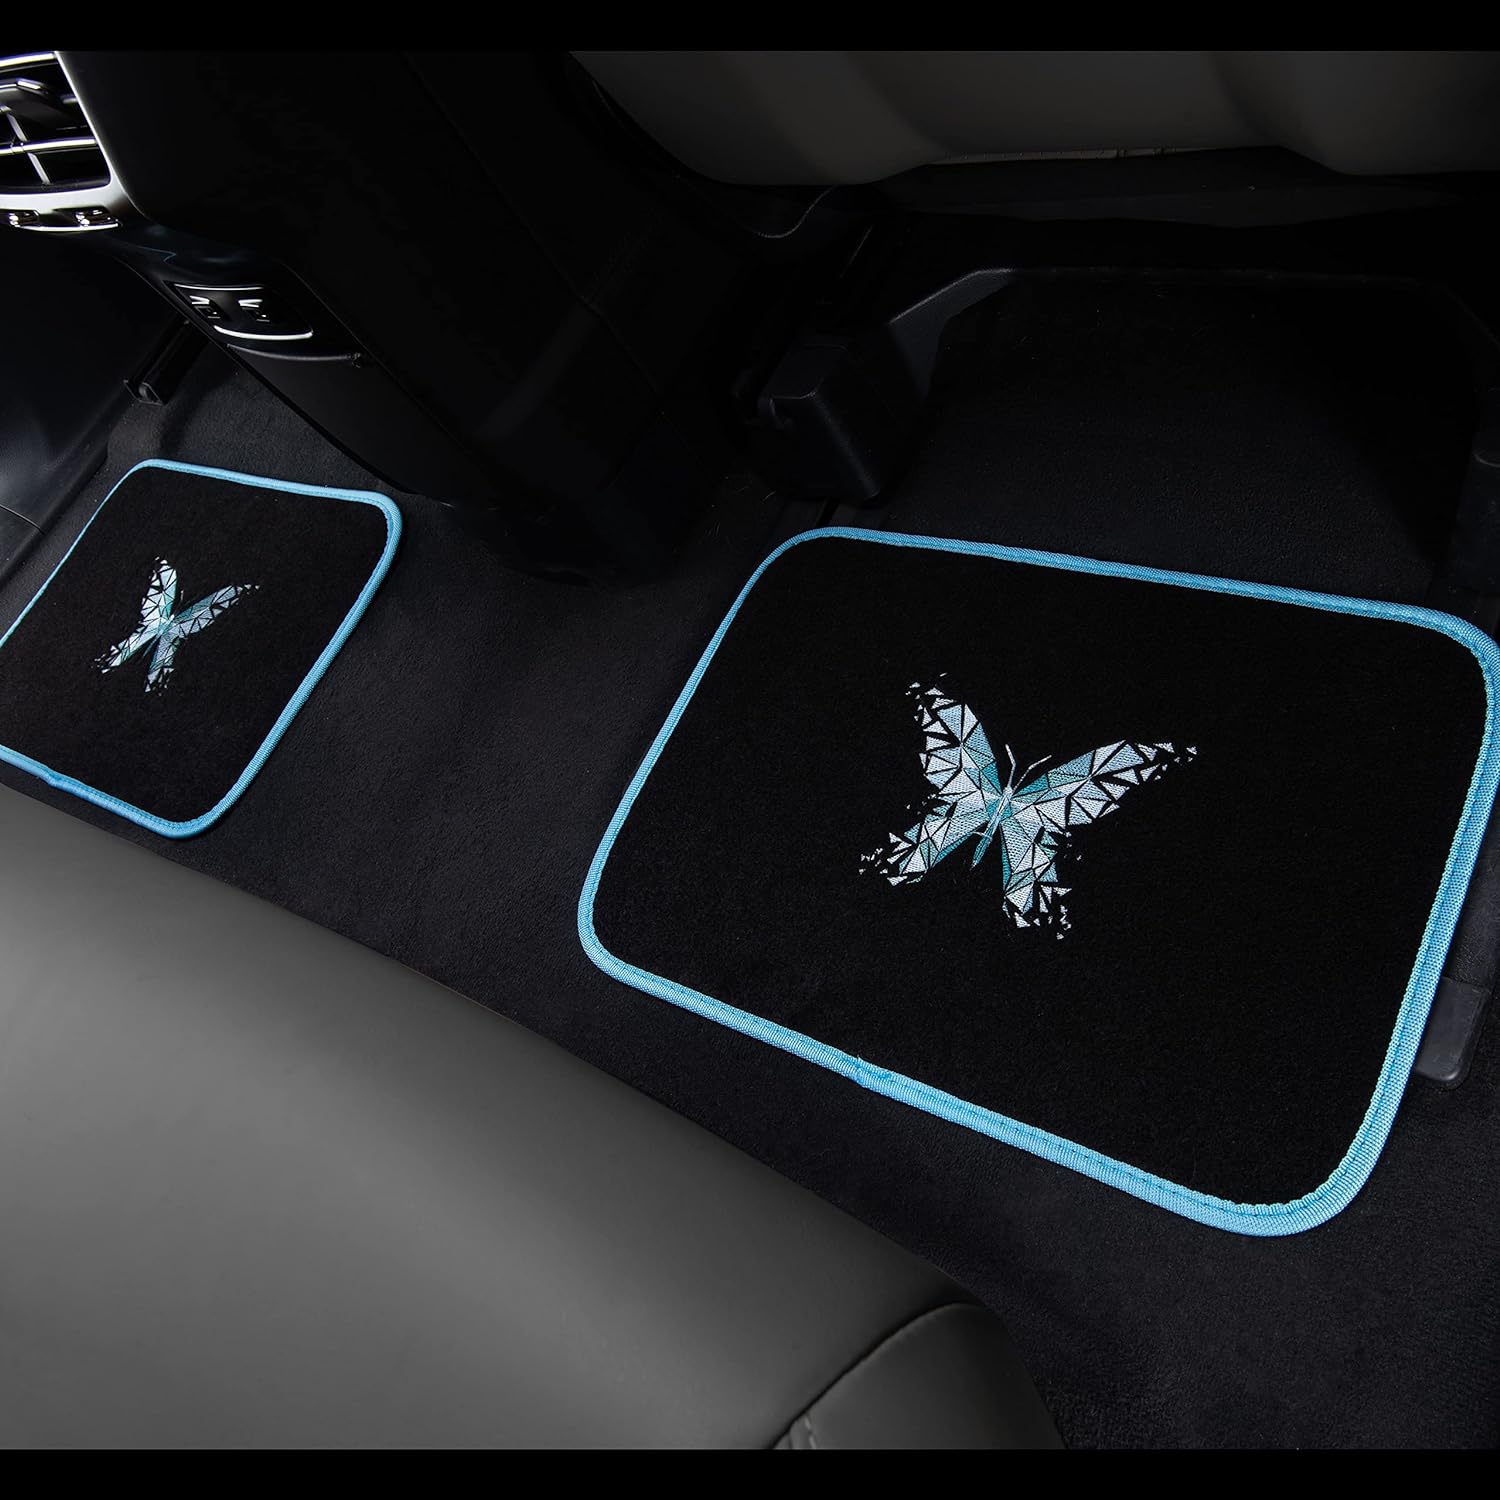 CAR PASS Universal Embroidery Geometric Butterfly Car Floor Mats with Heel Pad -Waterproof -Anti Slip Nibs, Blue Car Floor Mats Fit 95% Automotive,SUVS,Sedan,Vans,for Women,Girly (Blue Butterflies)